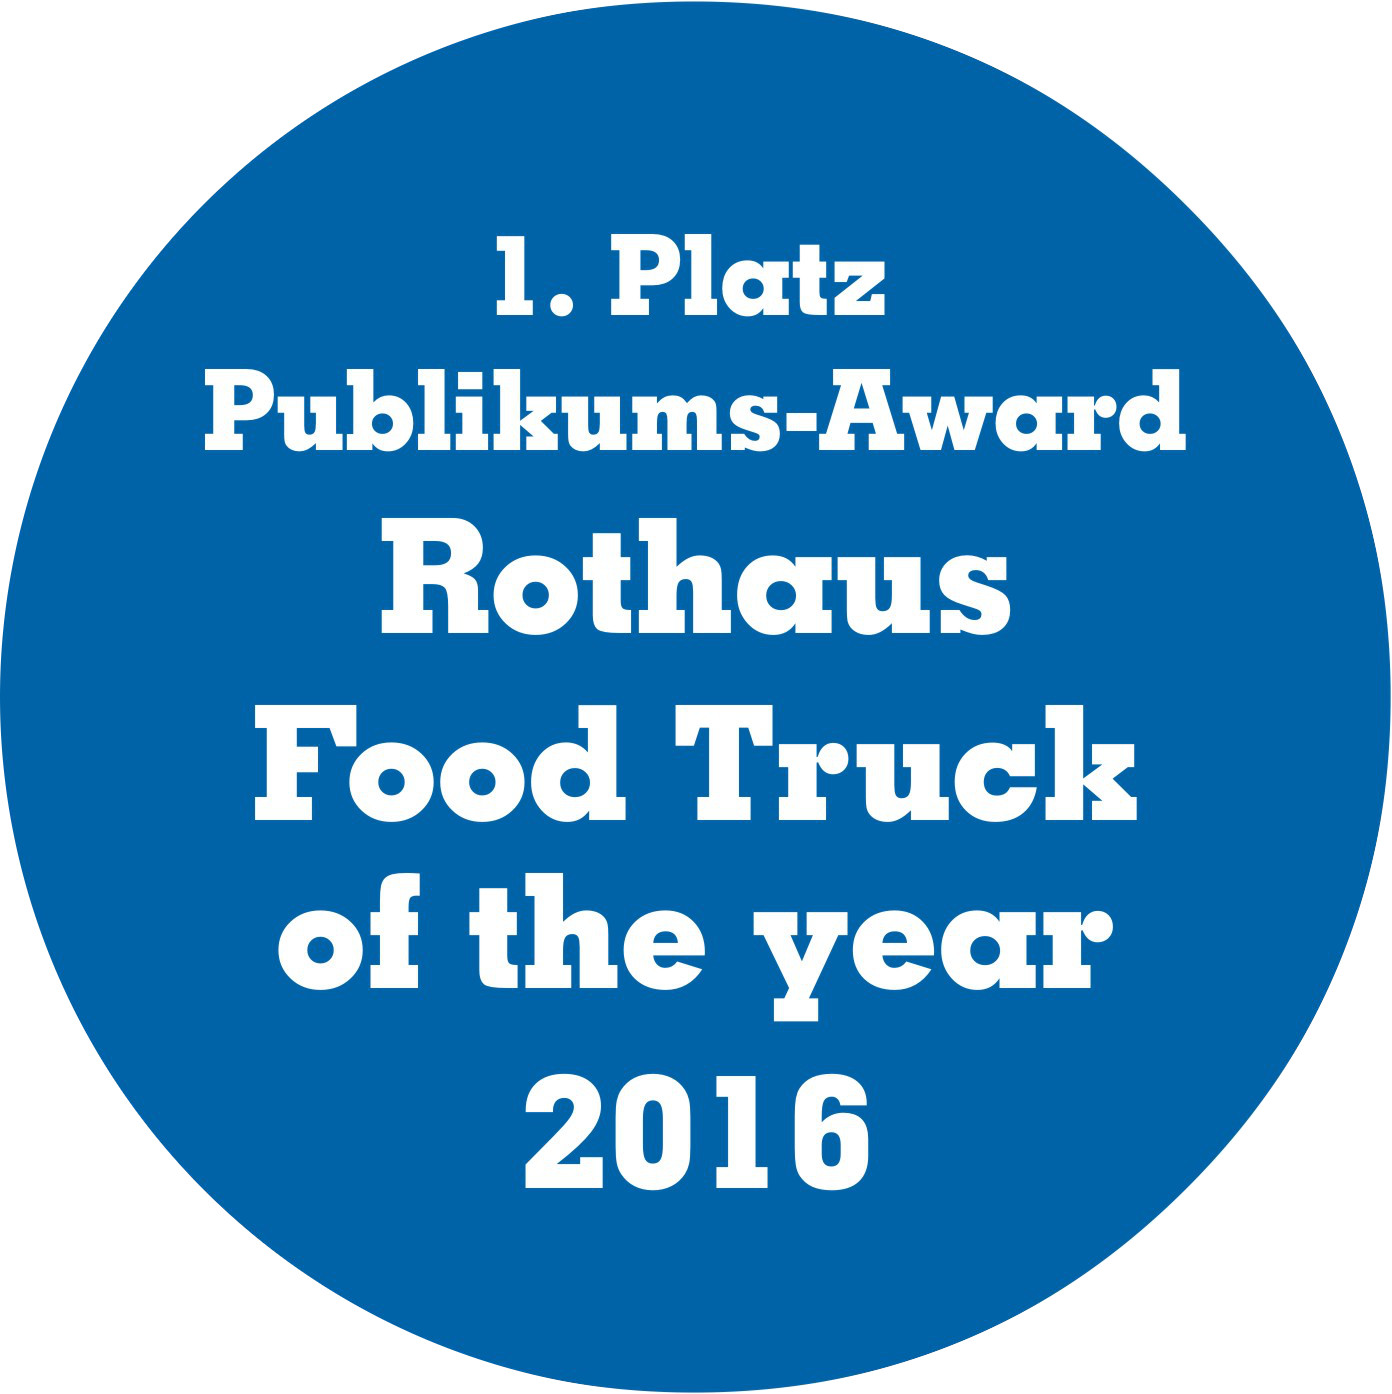 1. Platz Publikums Award Rothaus Foodtruck of the Year